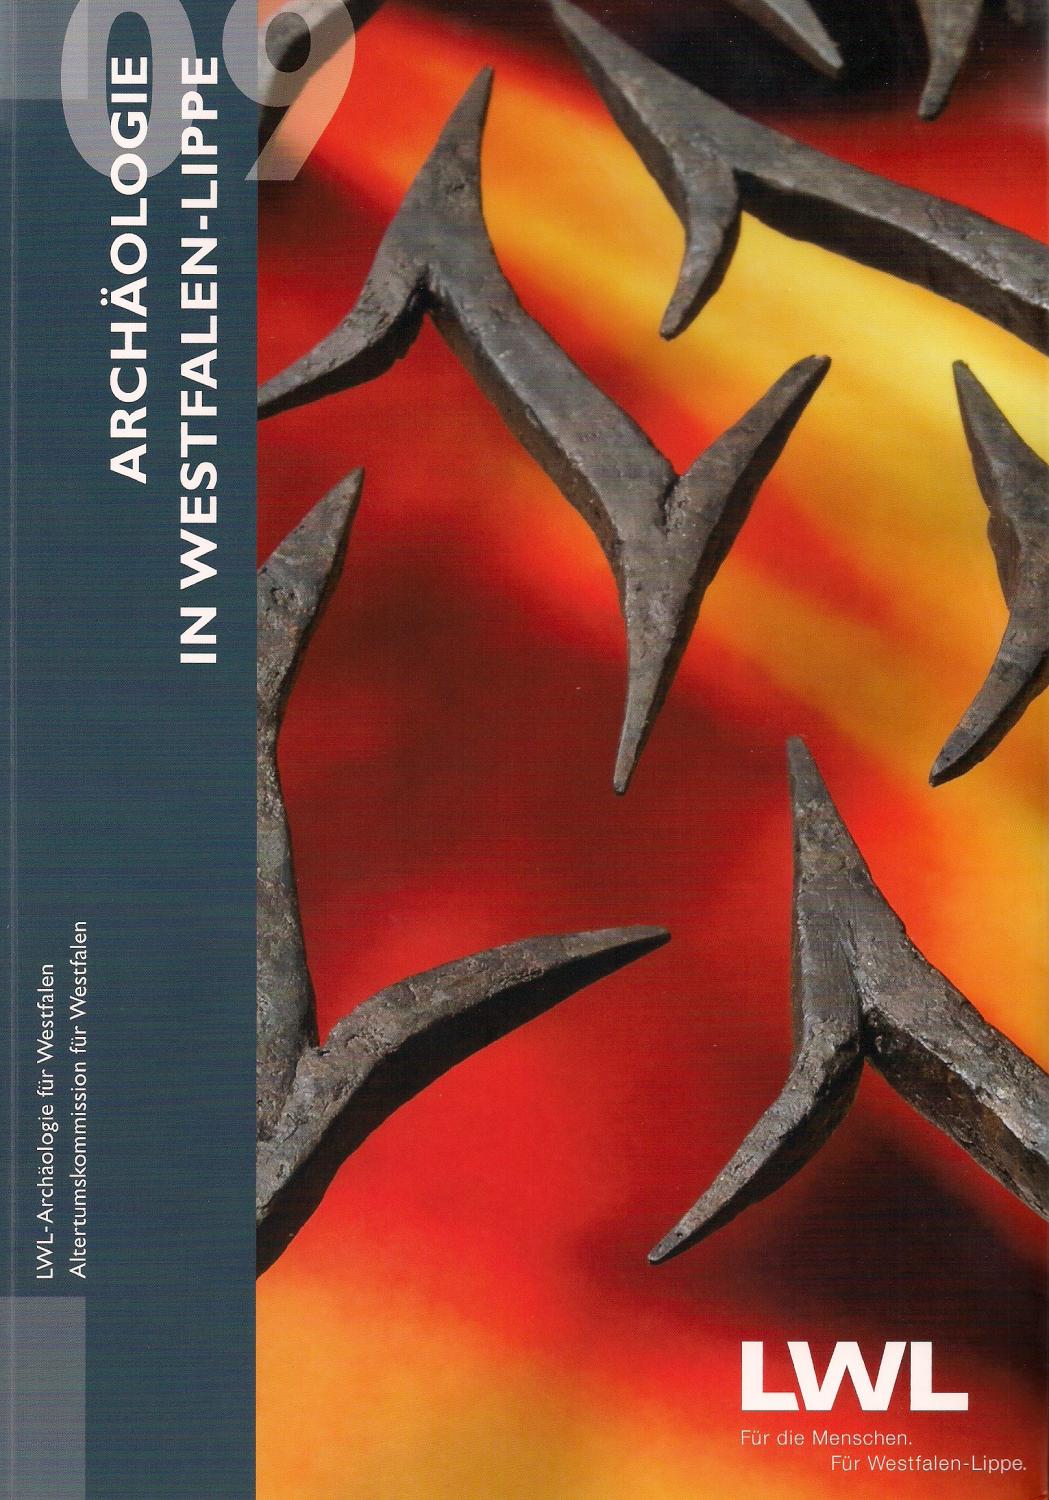 Archäologie in Westfalen-Lippe 2009 (Band 1) - Hrsg. LWL-Archäologie in Westfalen & Altertumskommission für Westfalen